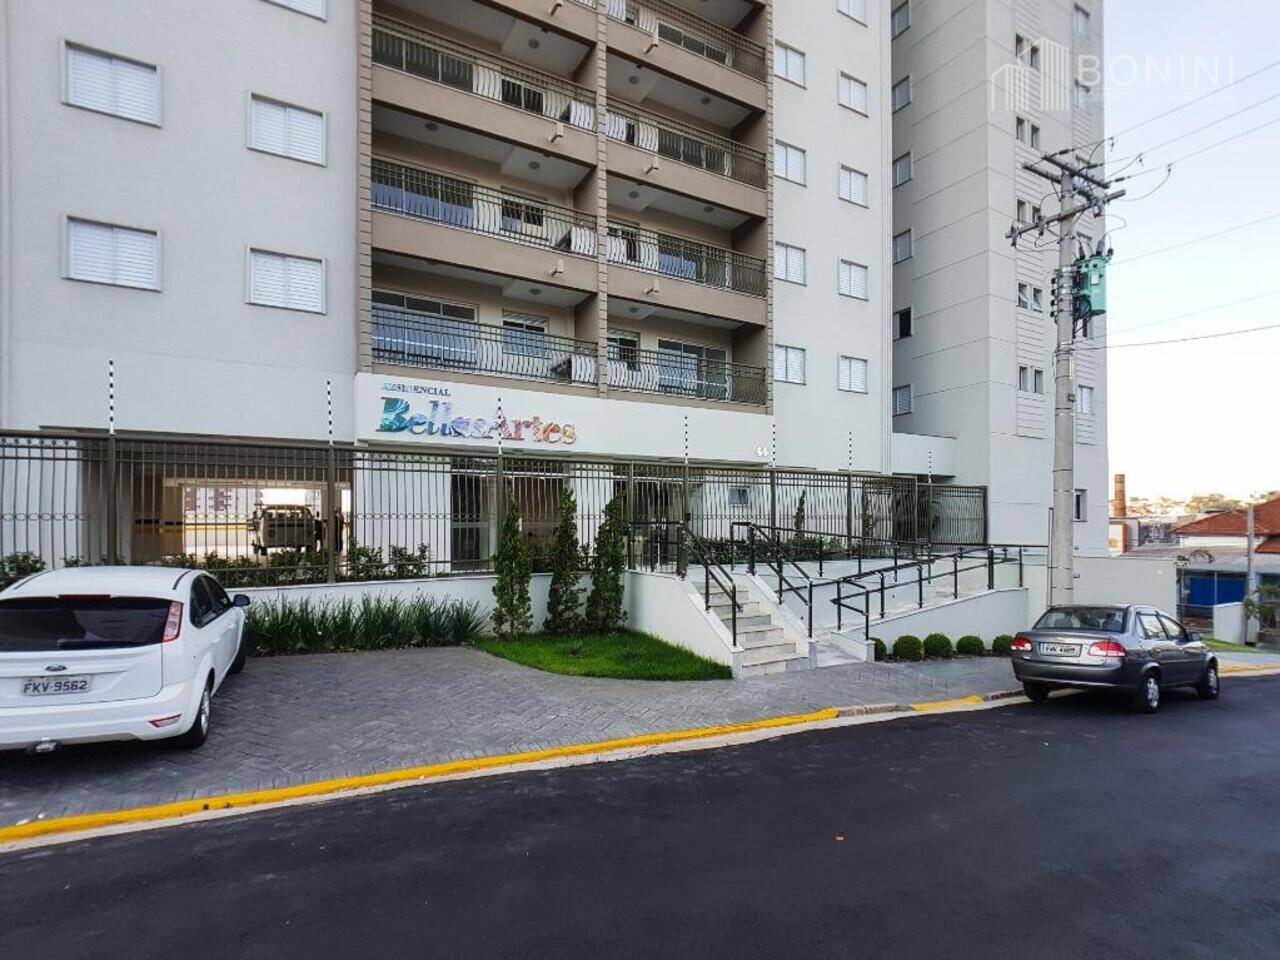 Apartamento Vila Santa Catarina, Americana - SP